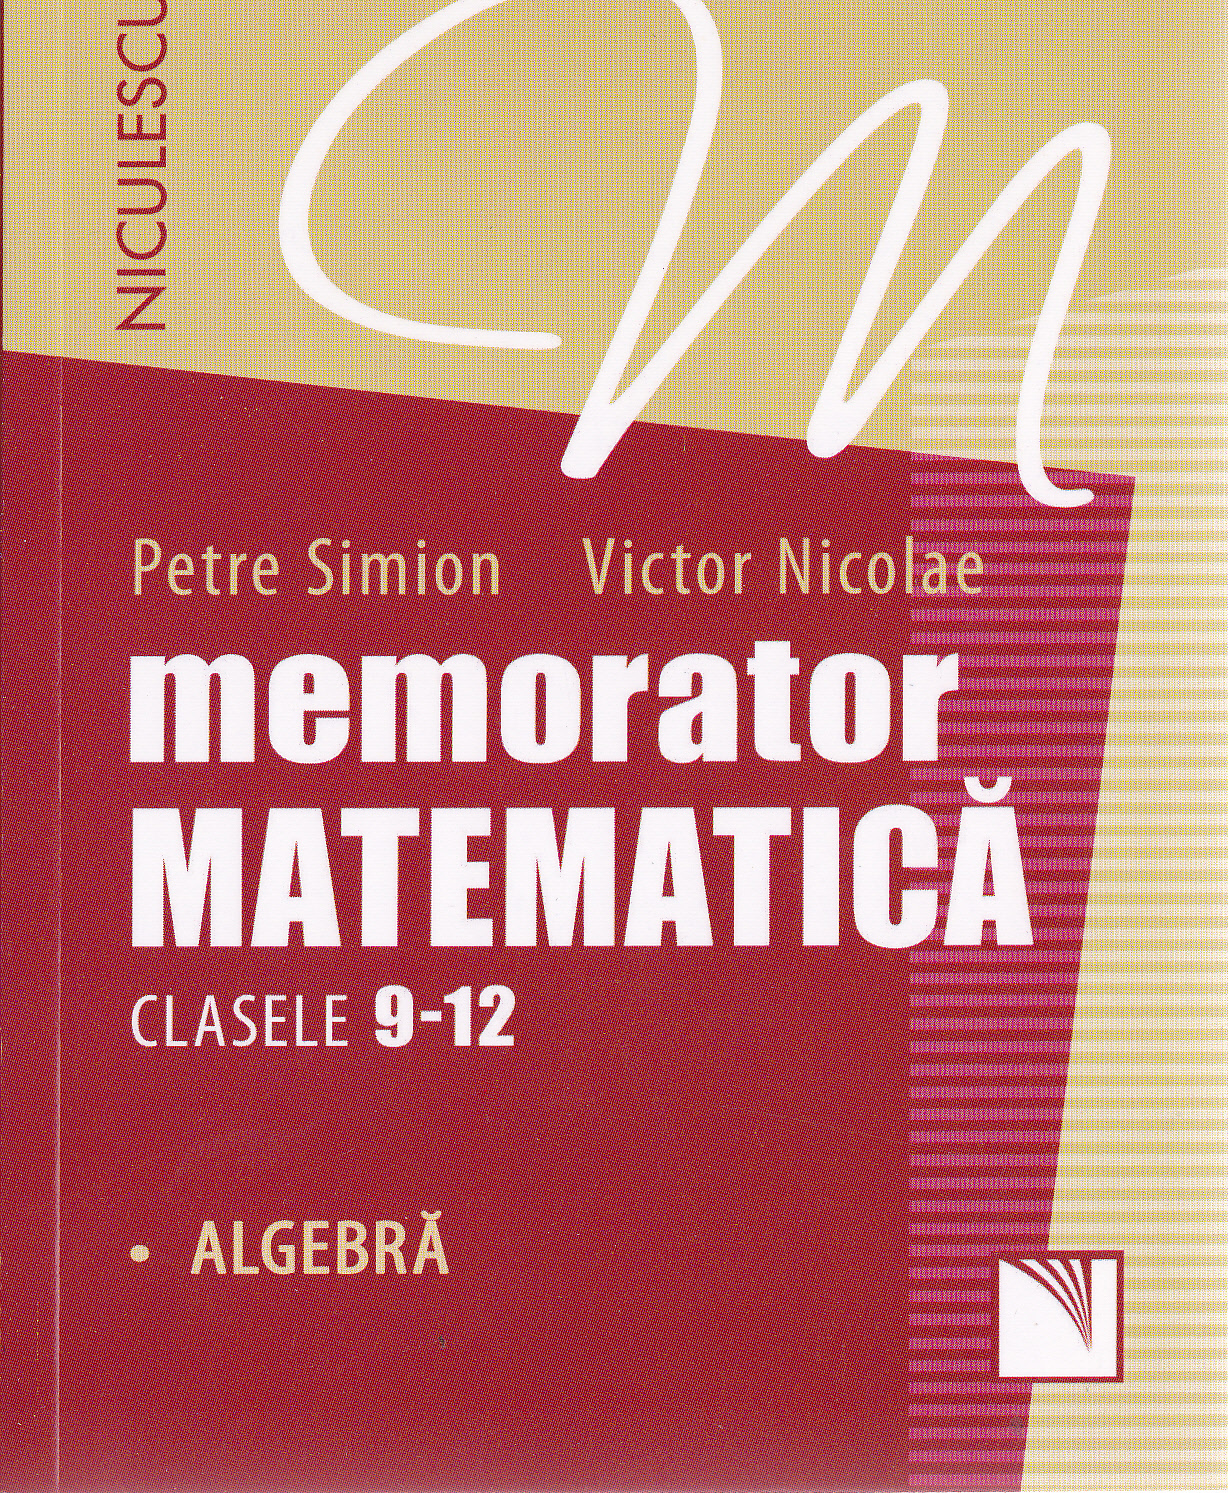 Memorator matematica - Clasele 9-12 - Algebra - Petre Simion, Victor Nicolae